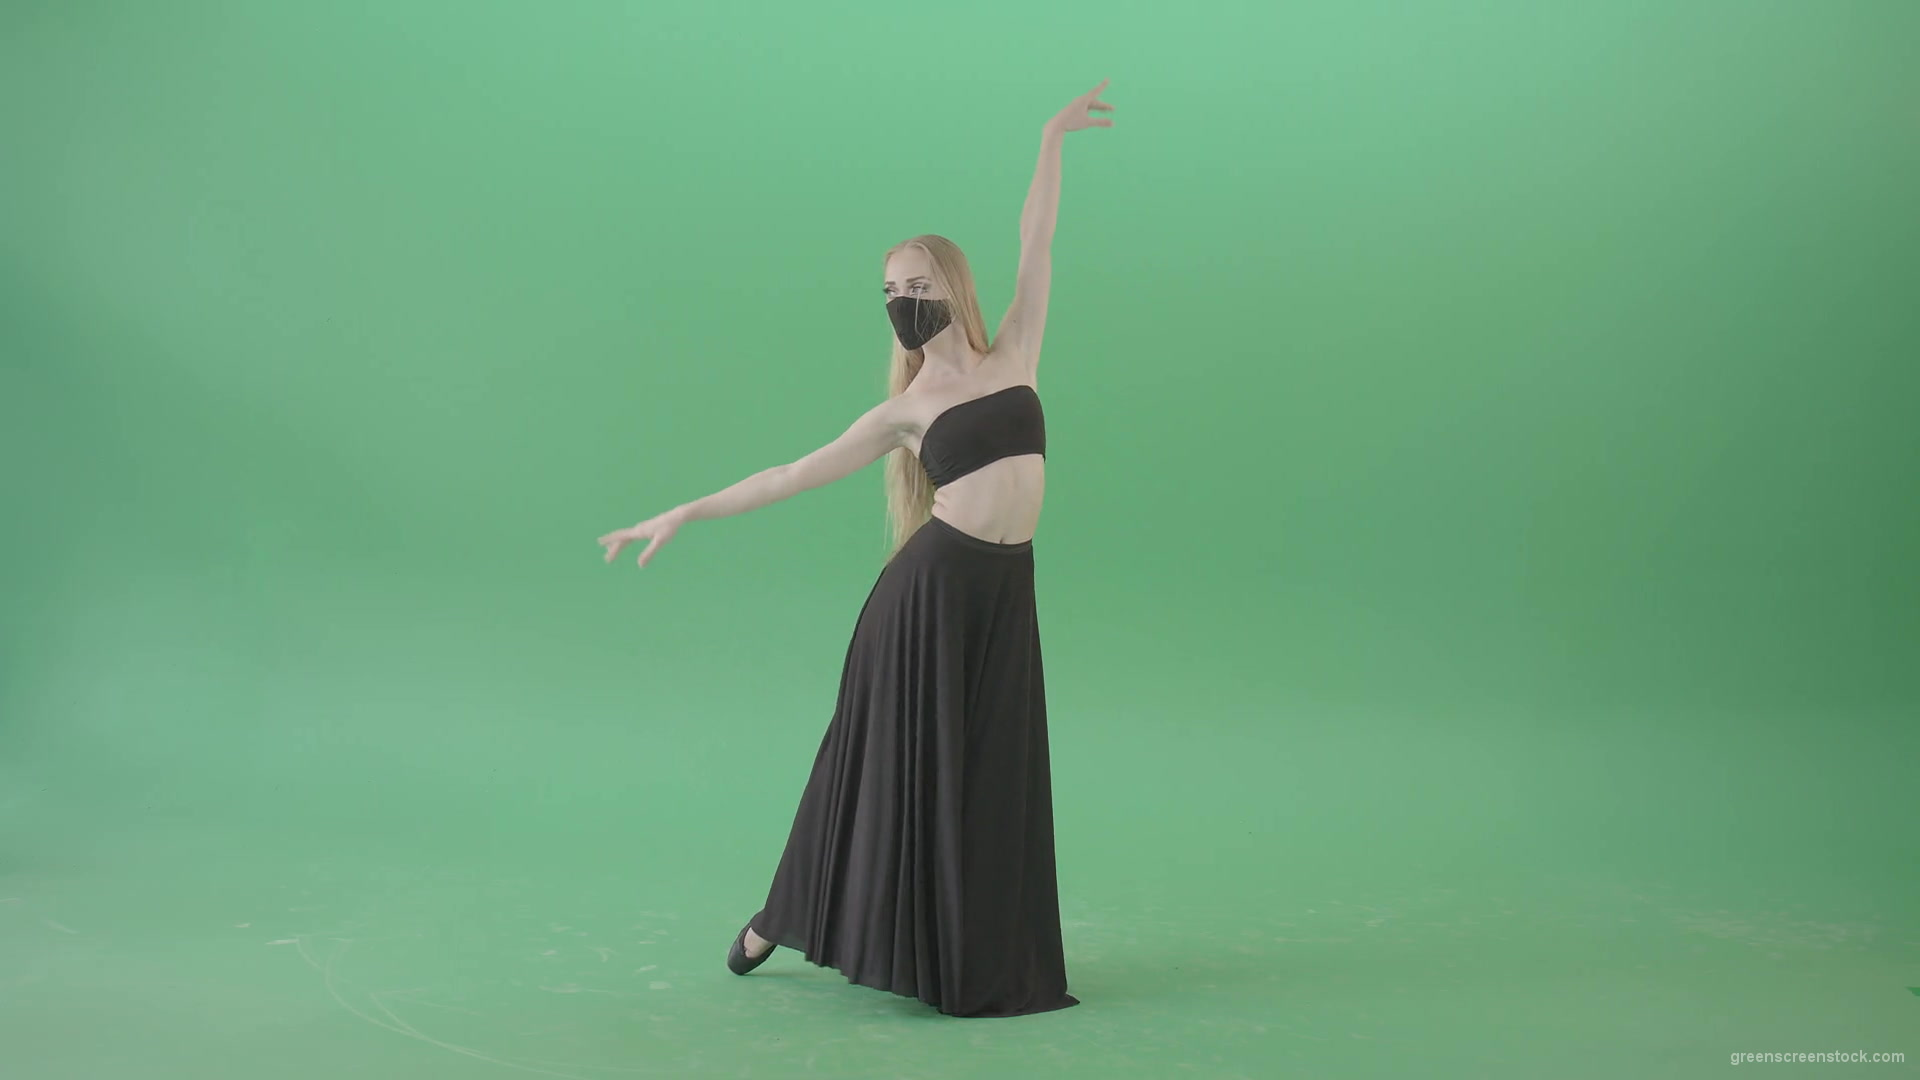 Blonde-Ballet-girl-in-black-dress-and-mask-dancing-Corona-Virus-flamenco-on-green-screen-4K-Video-Footage-1920_007 Green Screen Stock